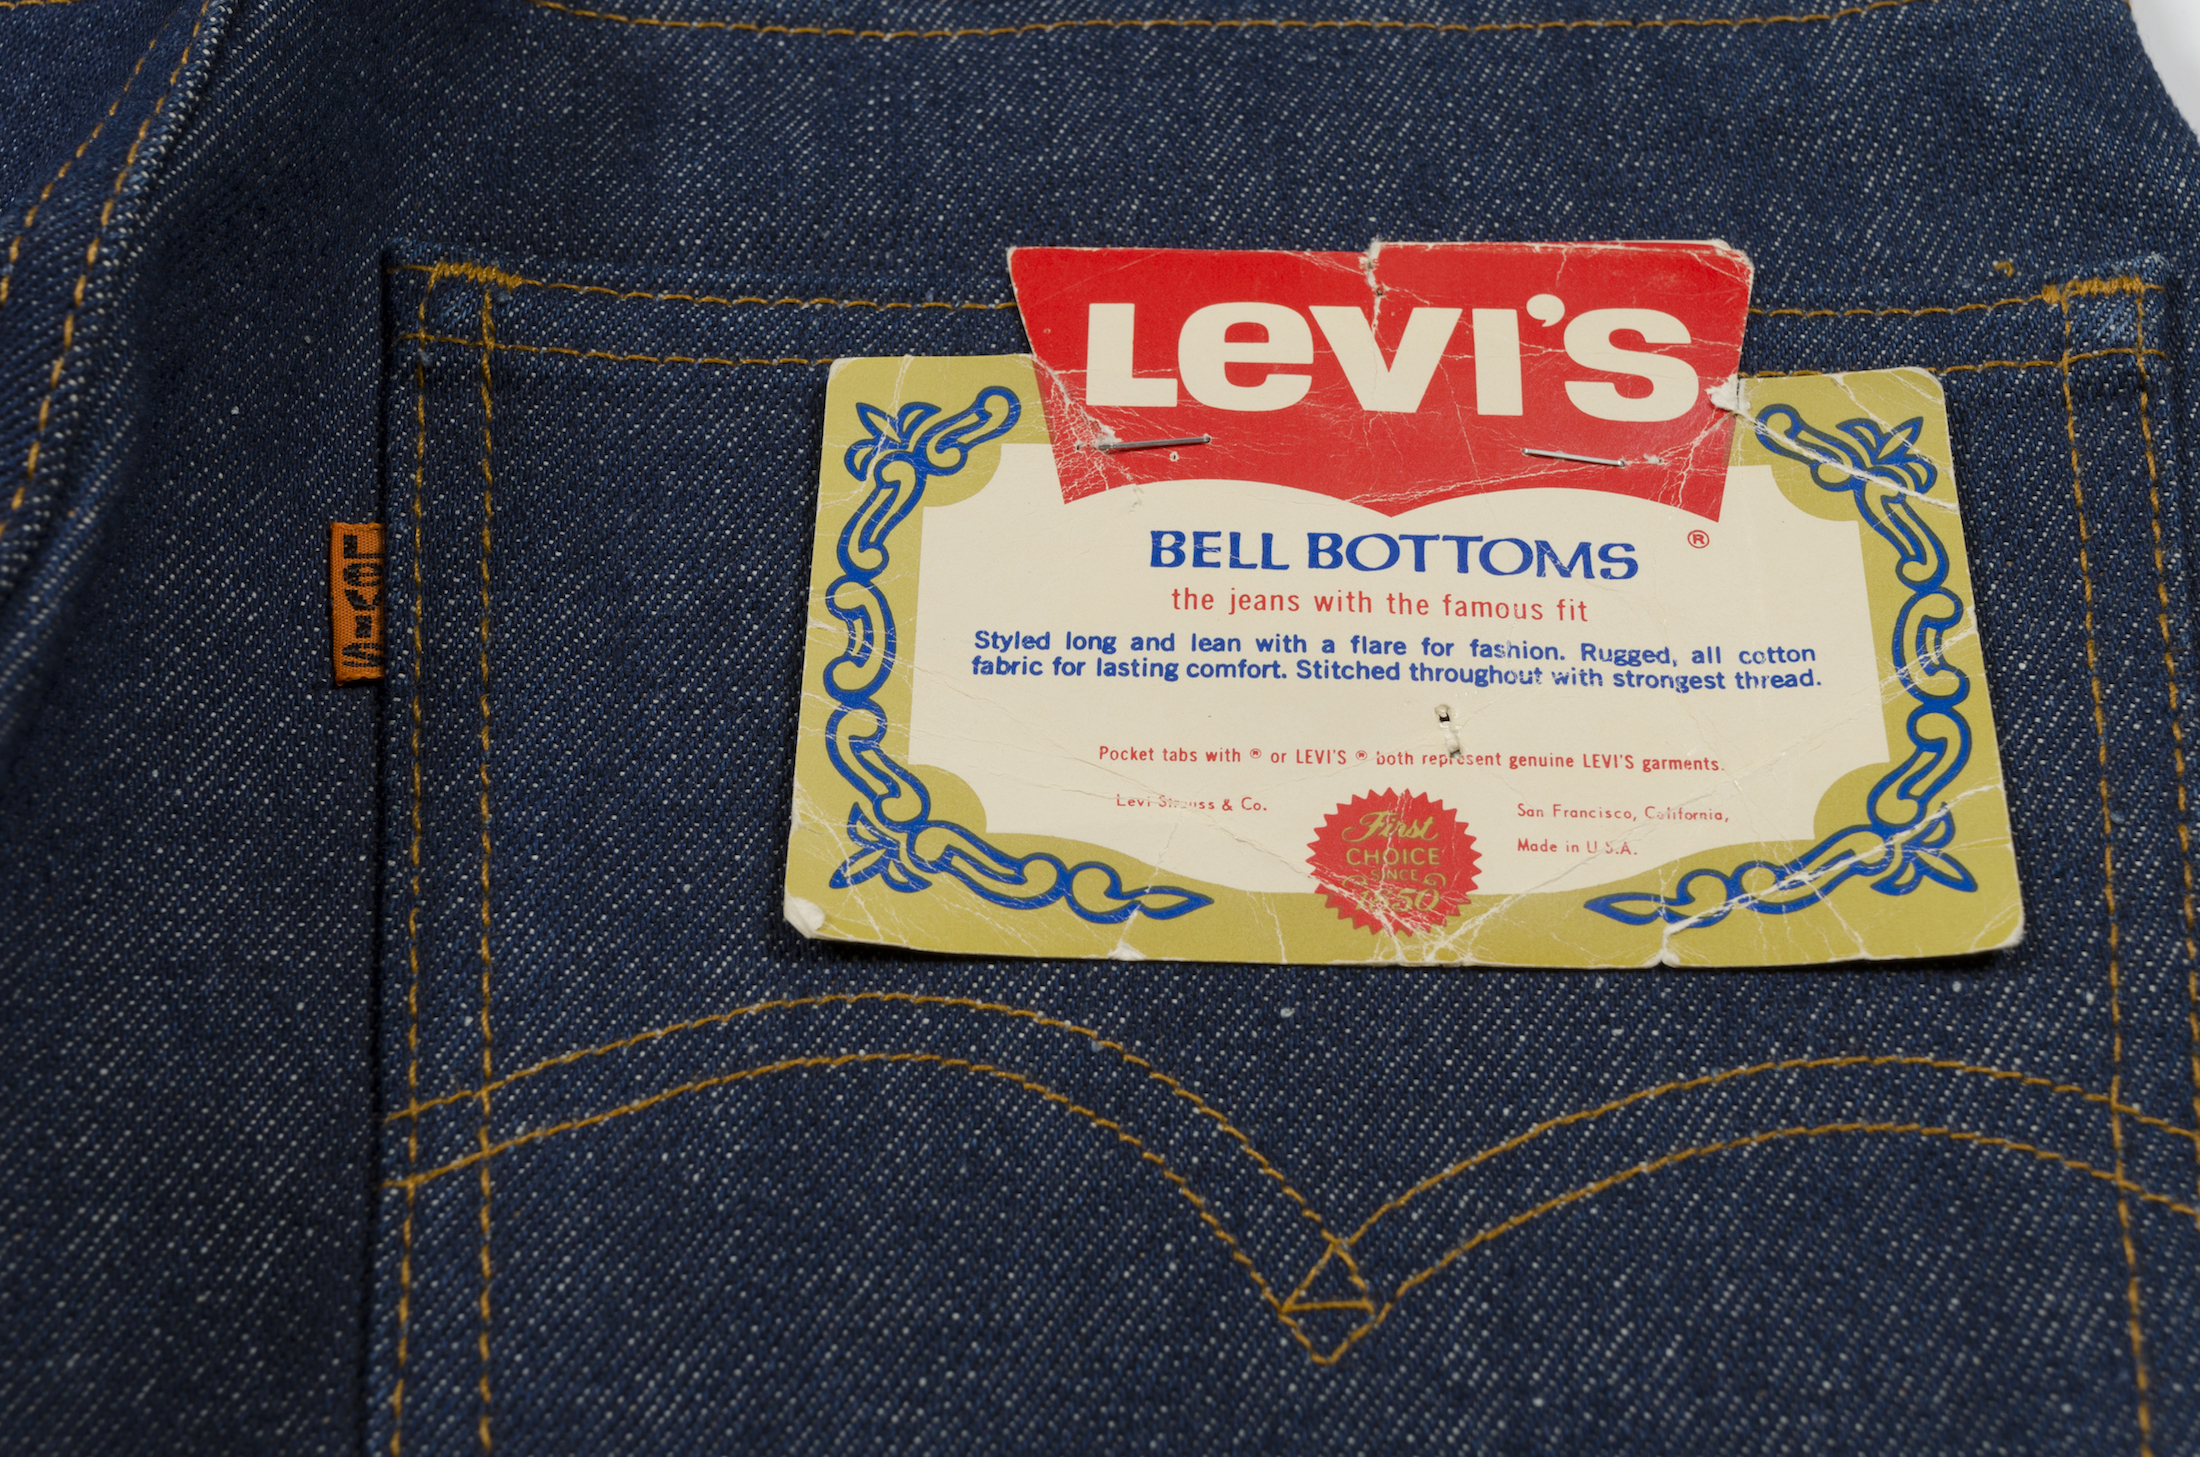 levi's red bandana jeans